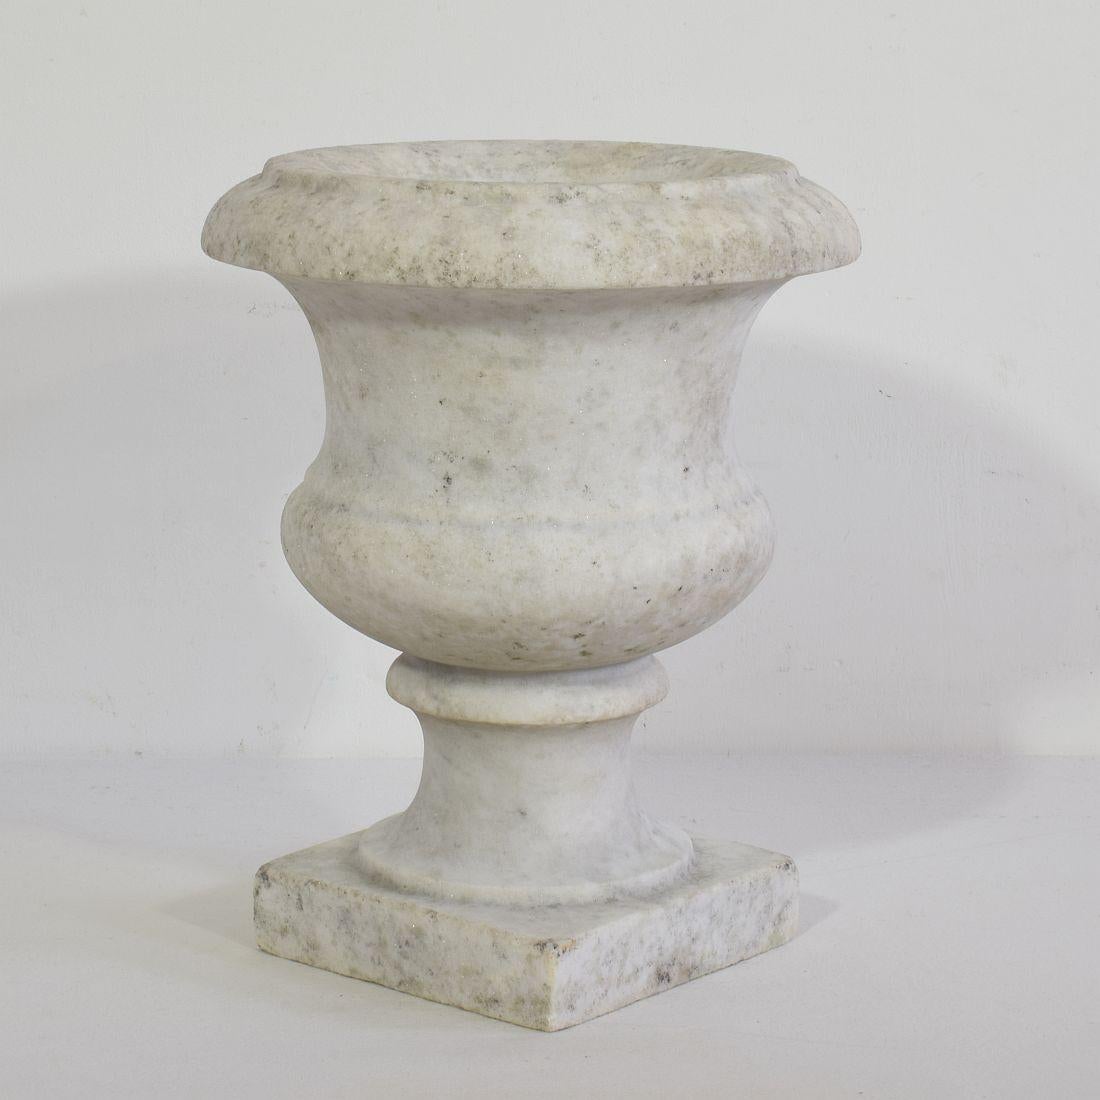 Rare white marble vase garden urn. Beautiful decorative centrepiece.
England, circa 1800-1850.
Weathered.










 